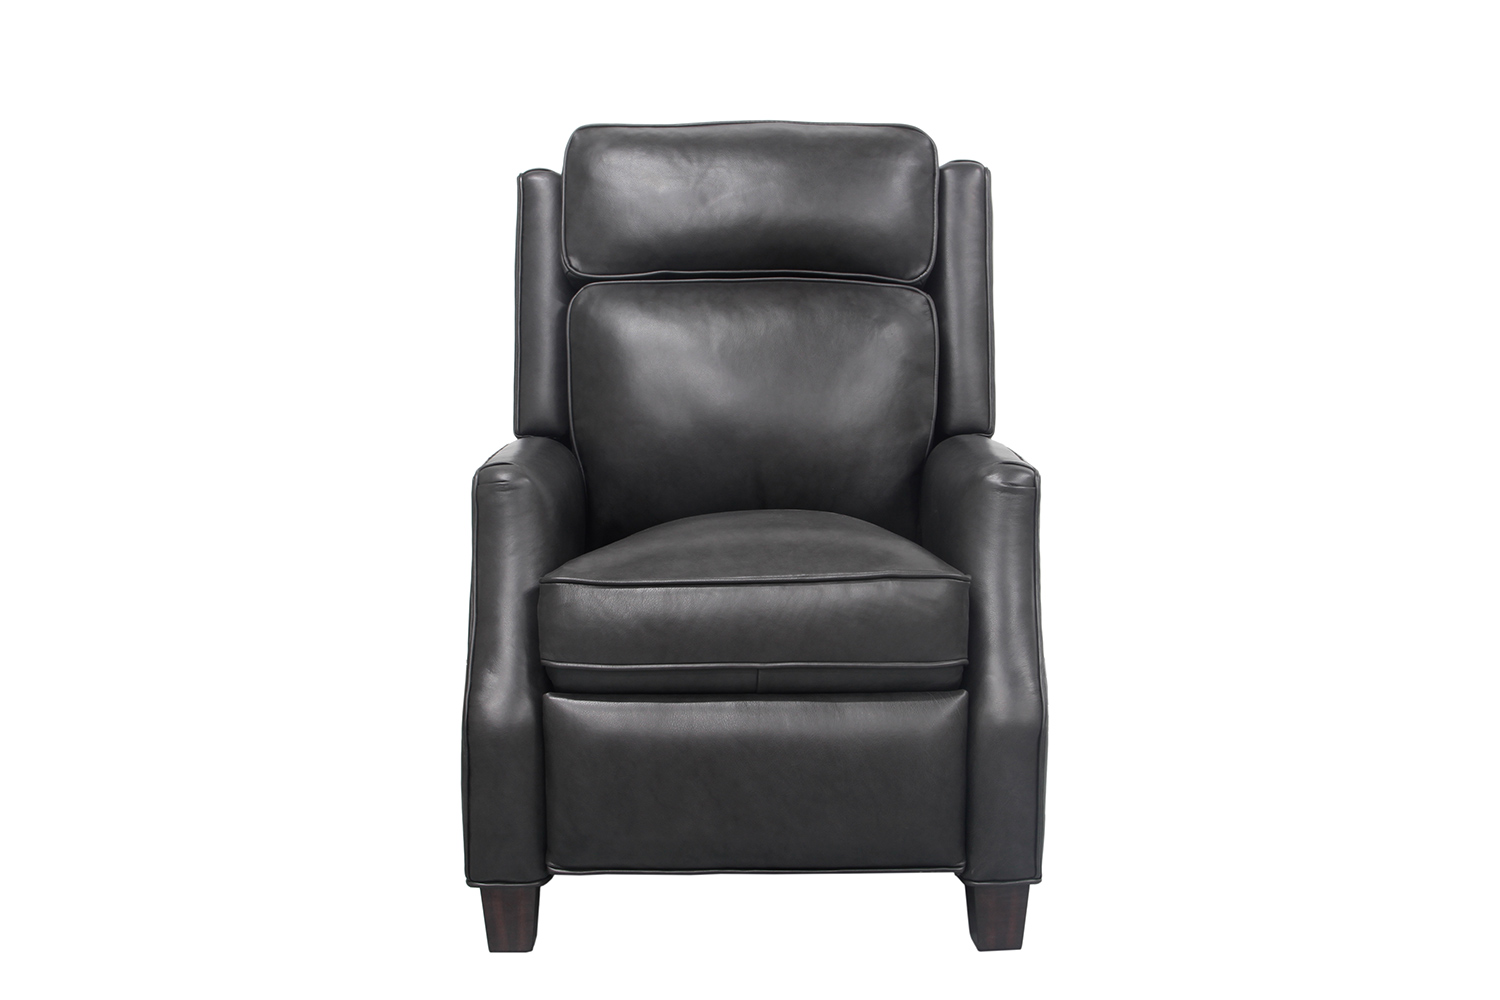 Barcalounger Nixon Recliner Chair - Shoreham Gray/All Leather